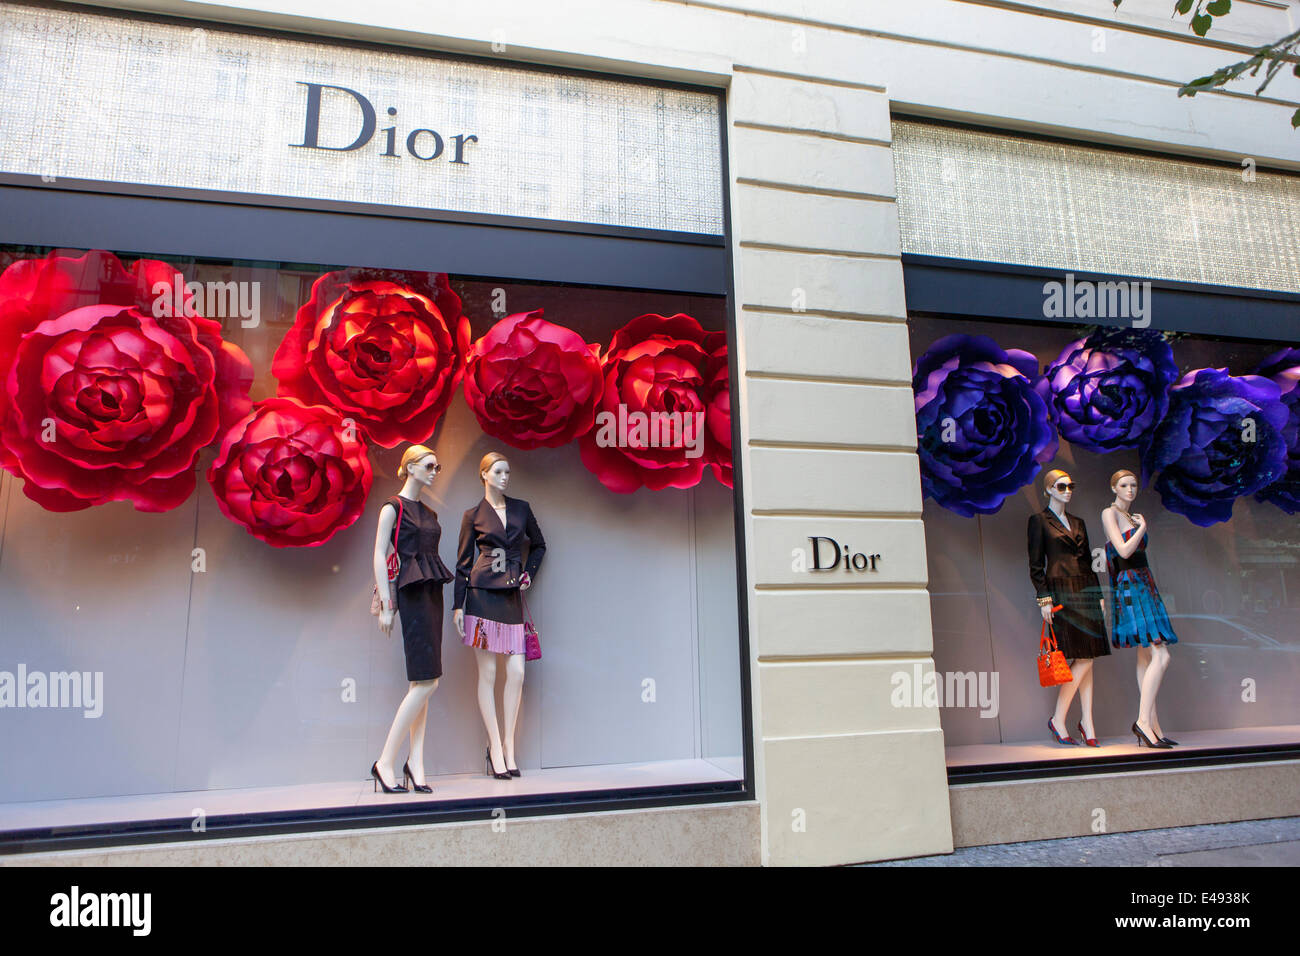 Parizska street, Dior, fashion store in Parizska street Prague, Old Town, Czech Republic Stock Photo